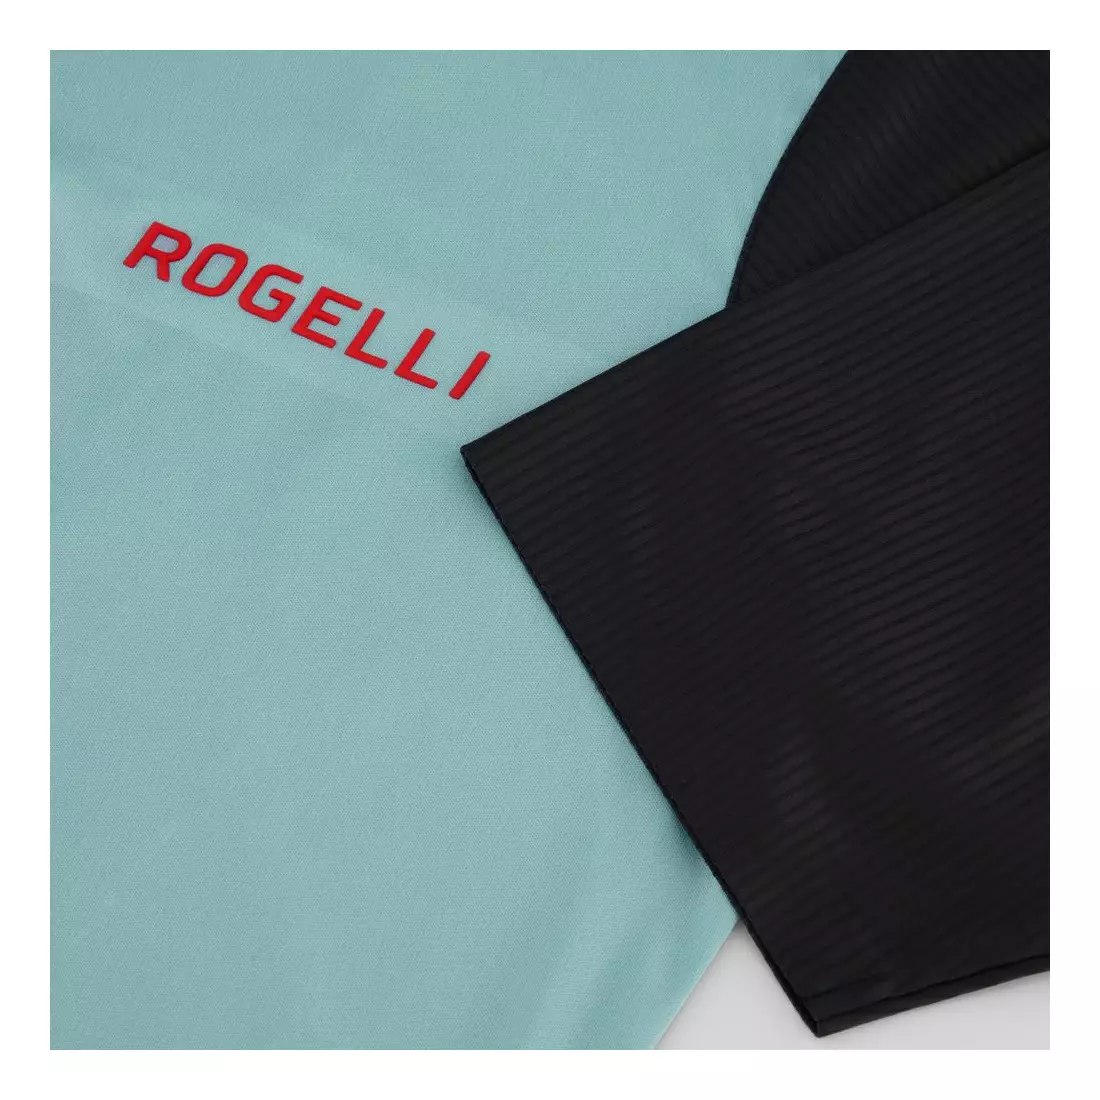 ROGELLI koszulka rowerowa męska MINIMAL black/grey